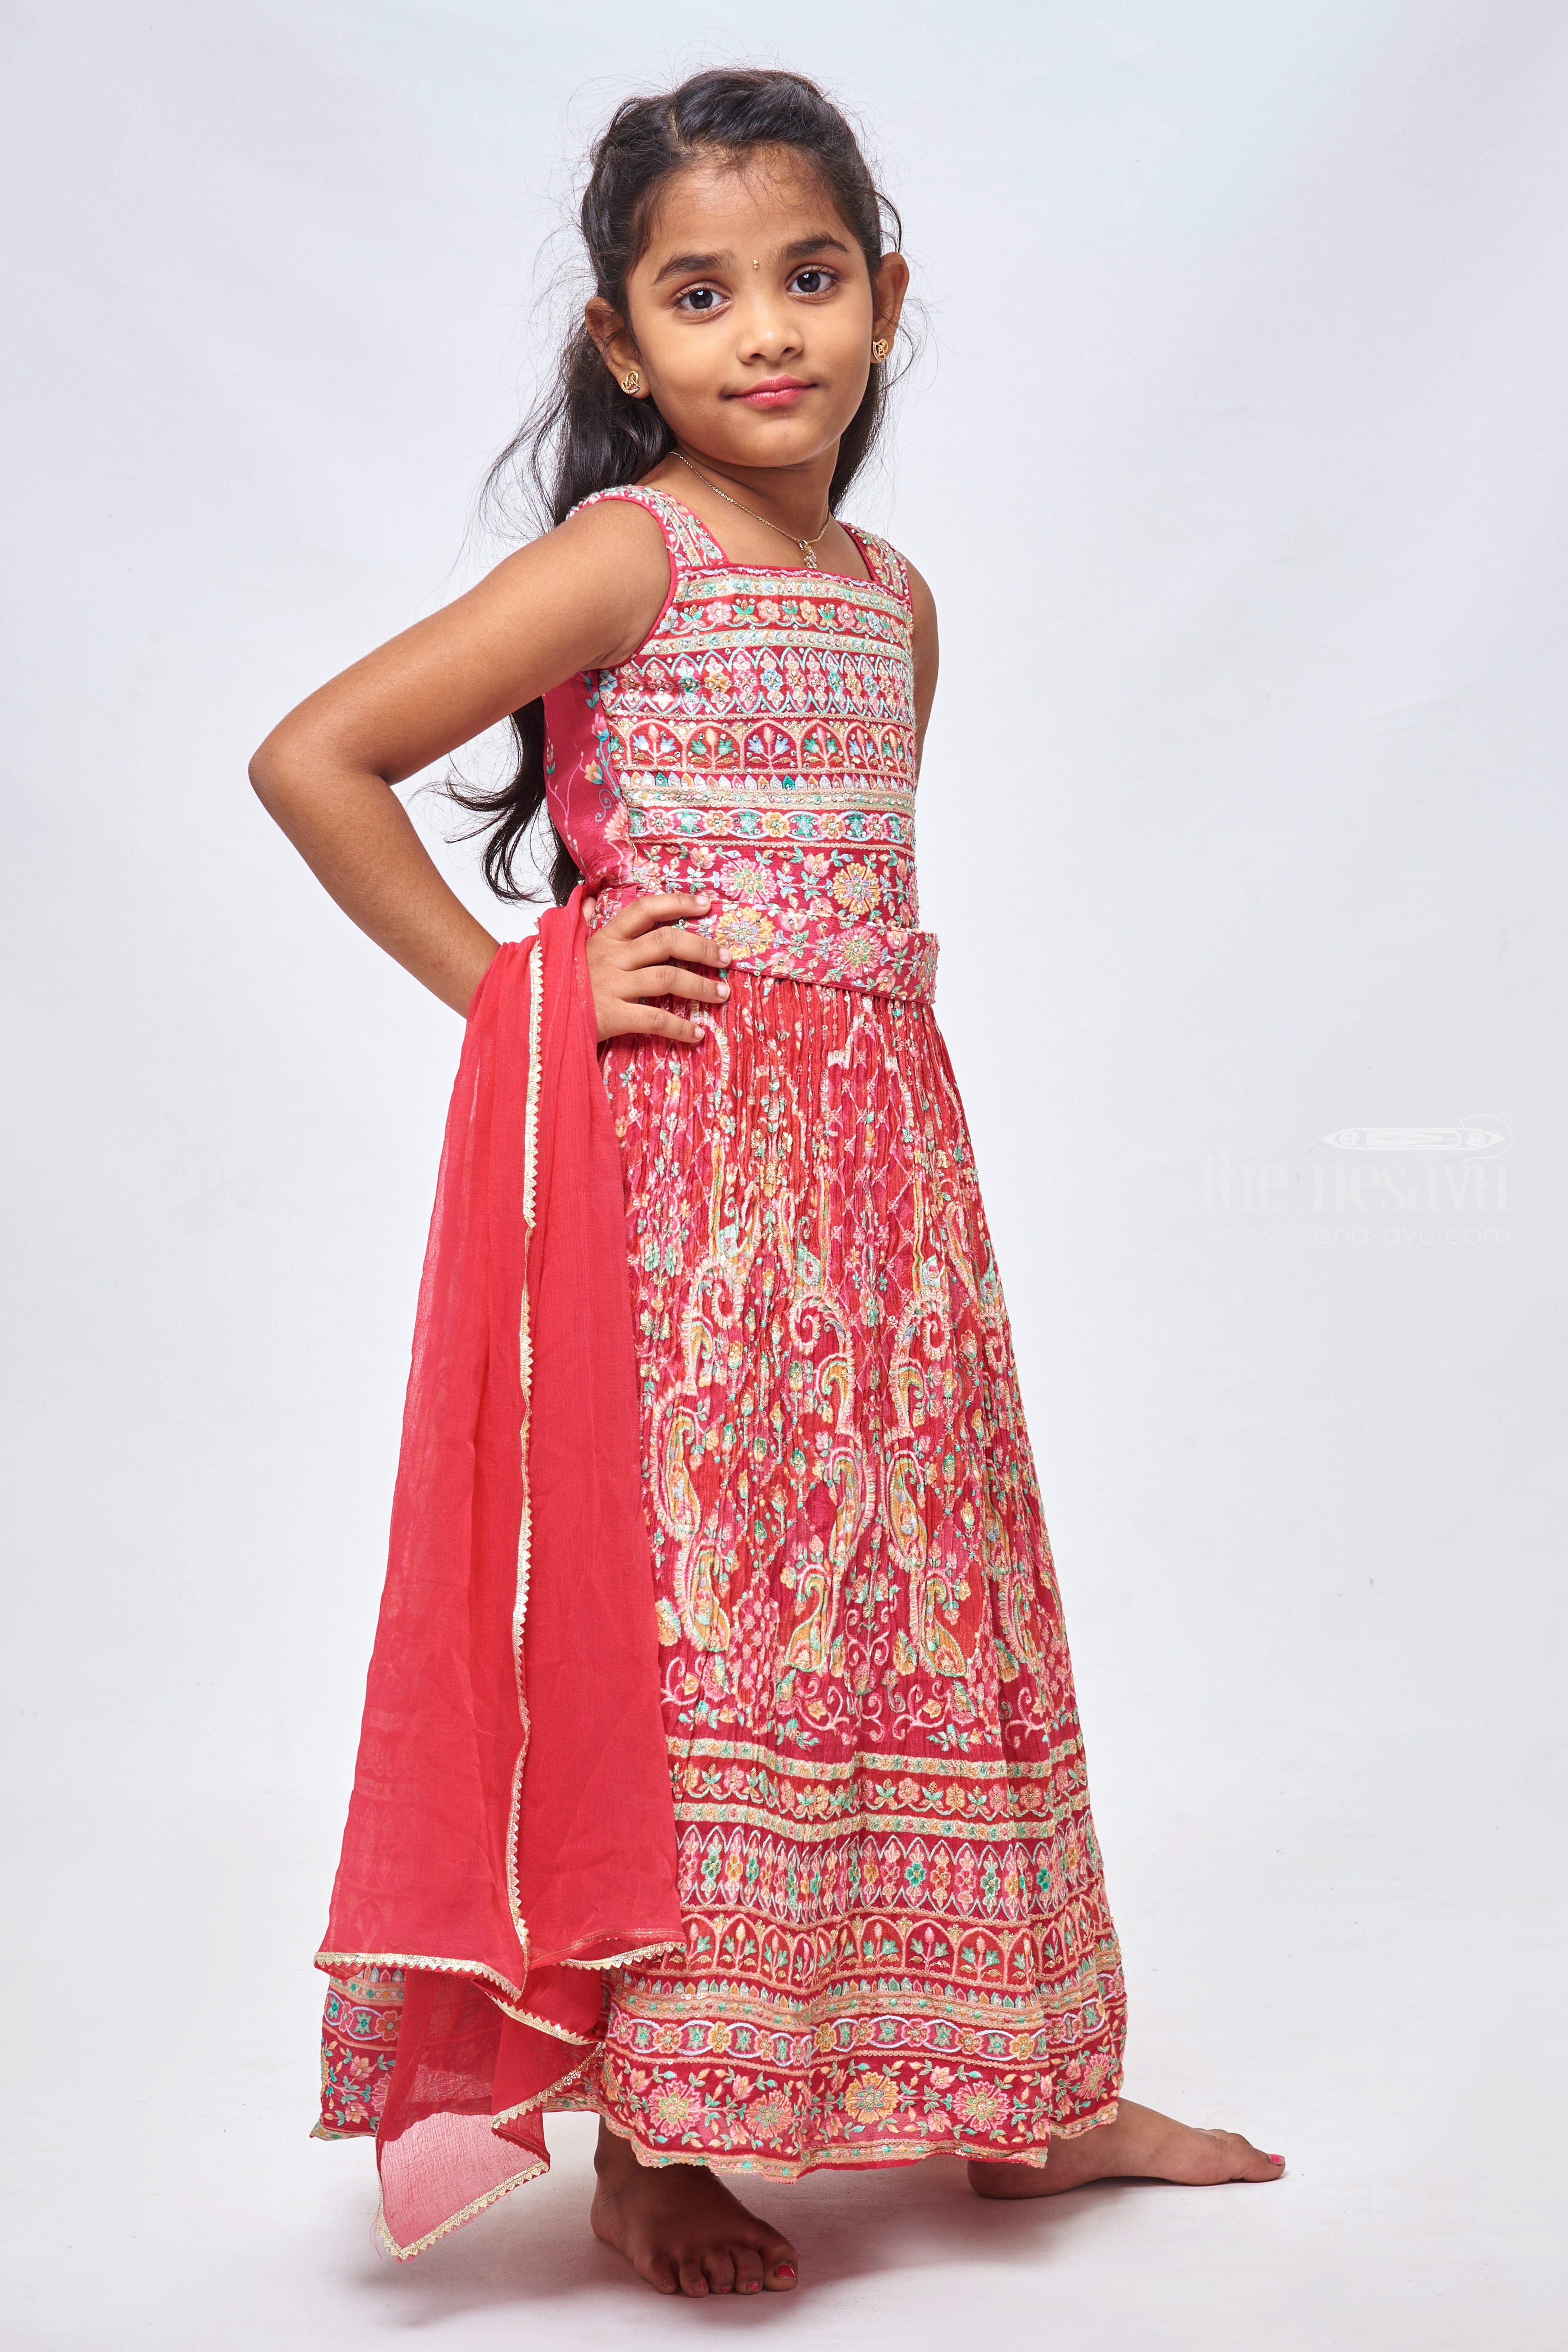 I ❤️ Next Girls Dress Christmas Diwali Eid Party Dresses Kids Clothing  Clothes | eBay